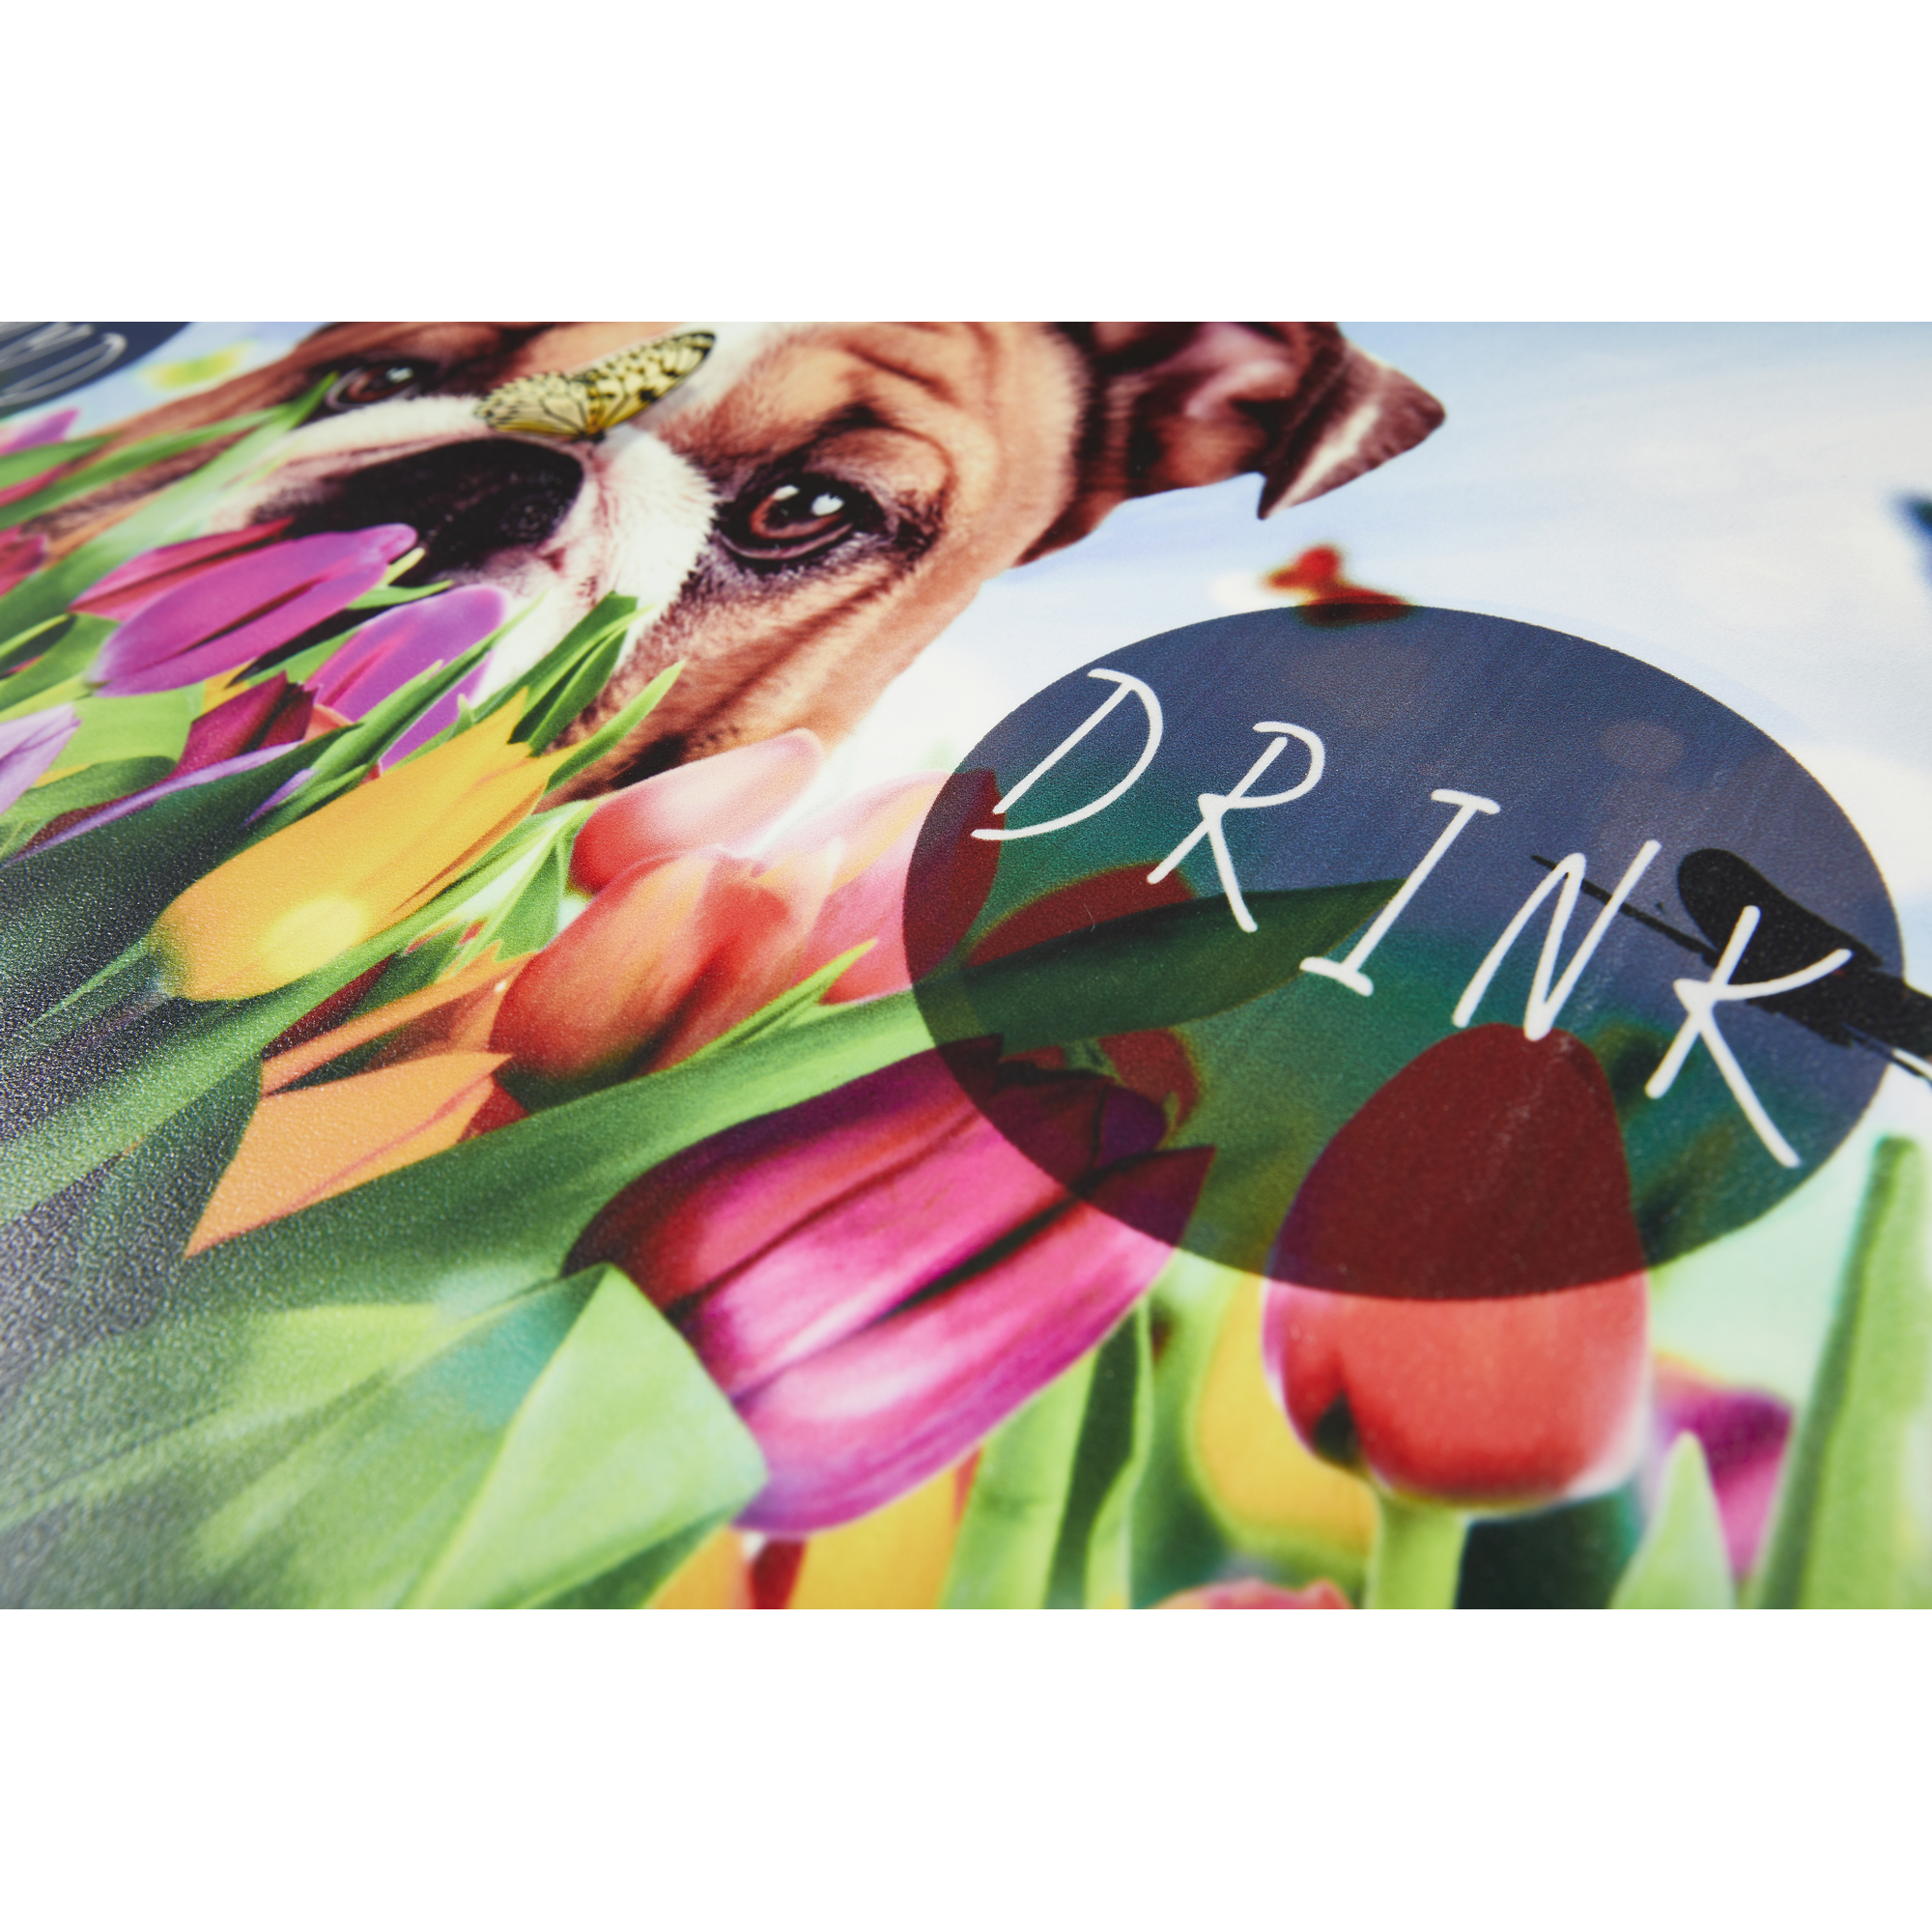 Napfunterlage 'Proper Food + Drink Dog' mehrfarbig 49 x 79 cm + product picture